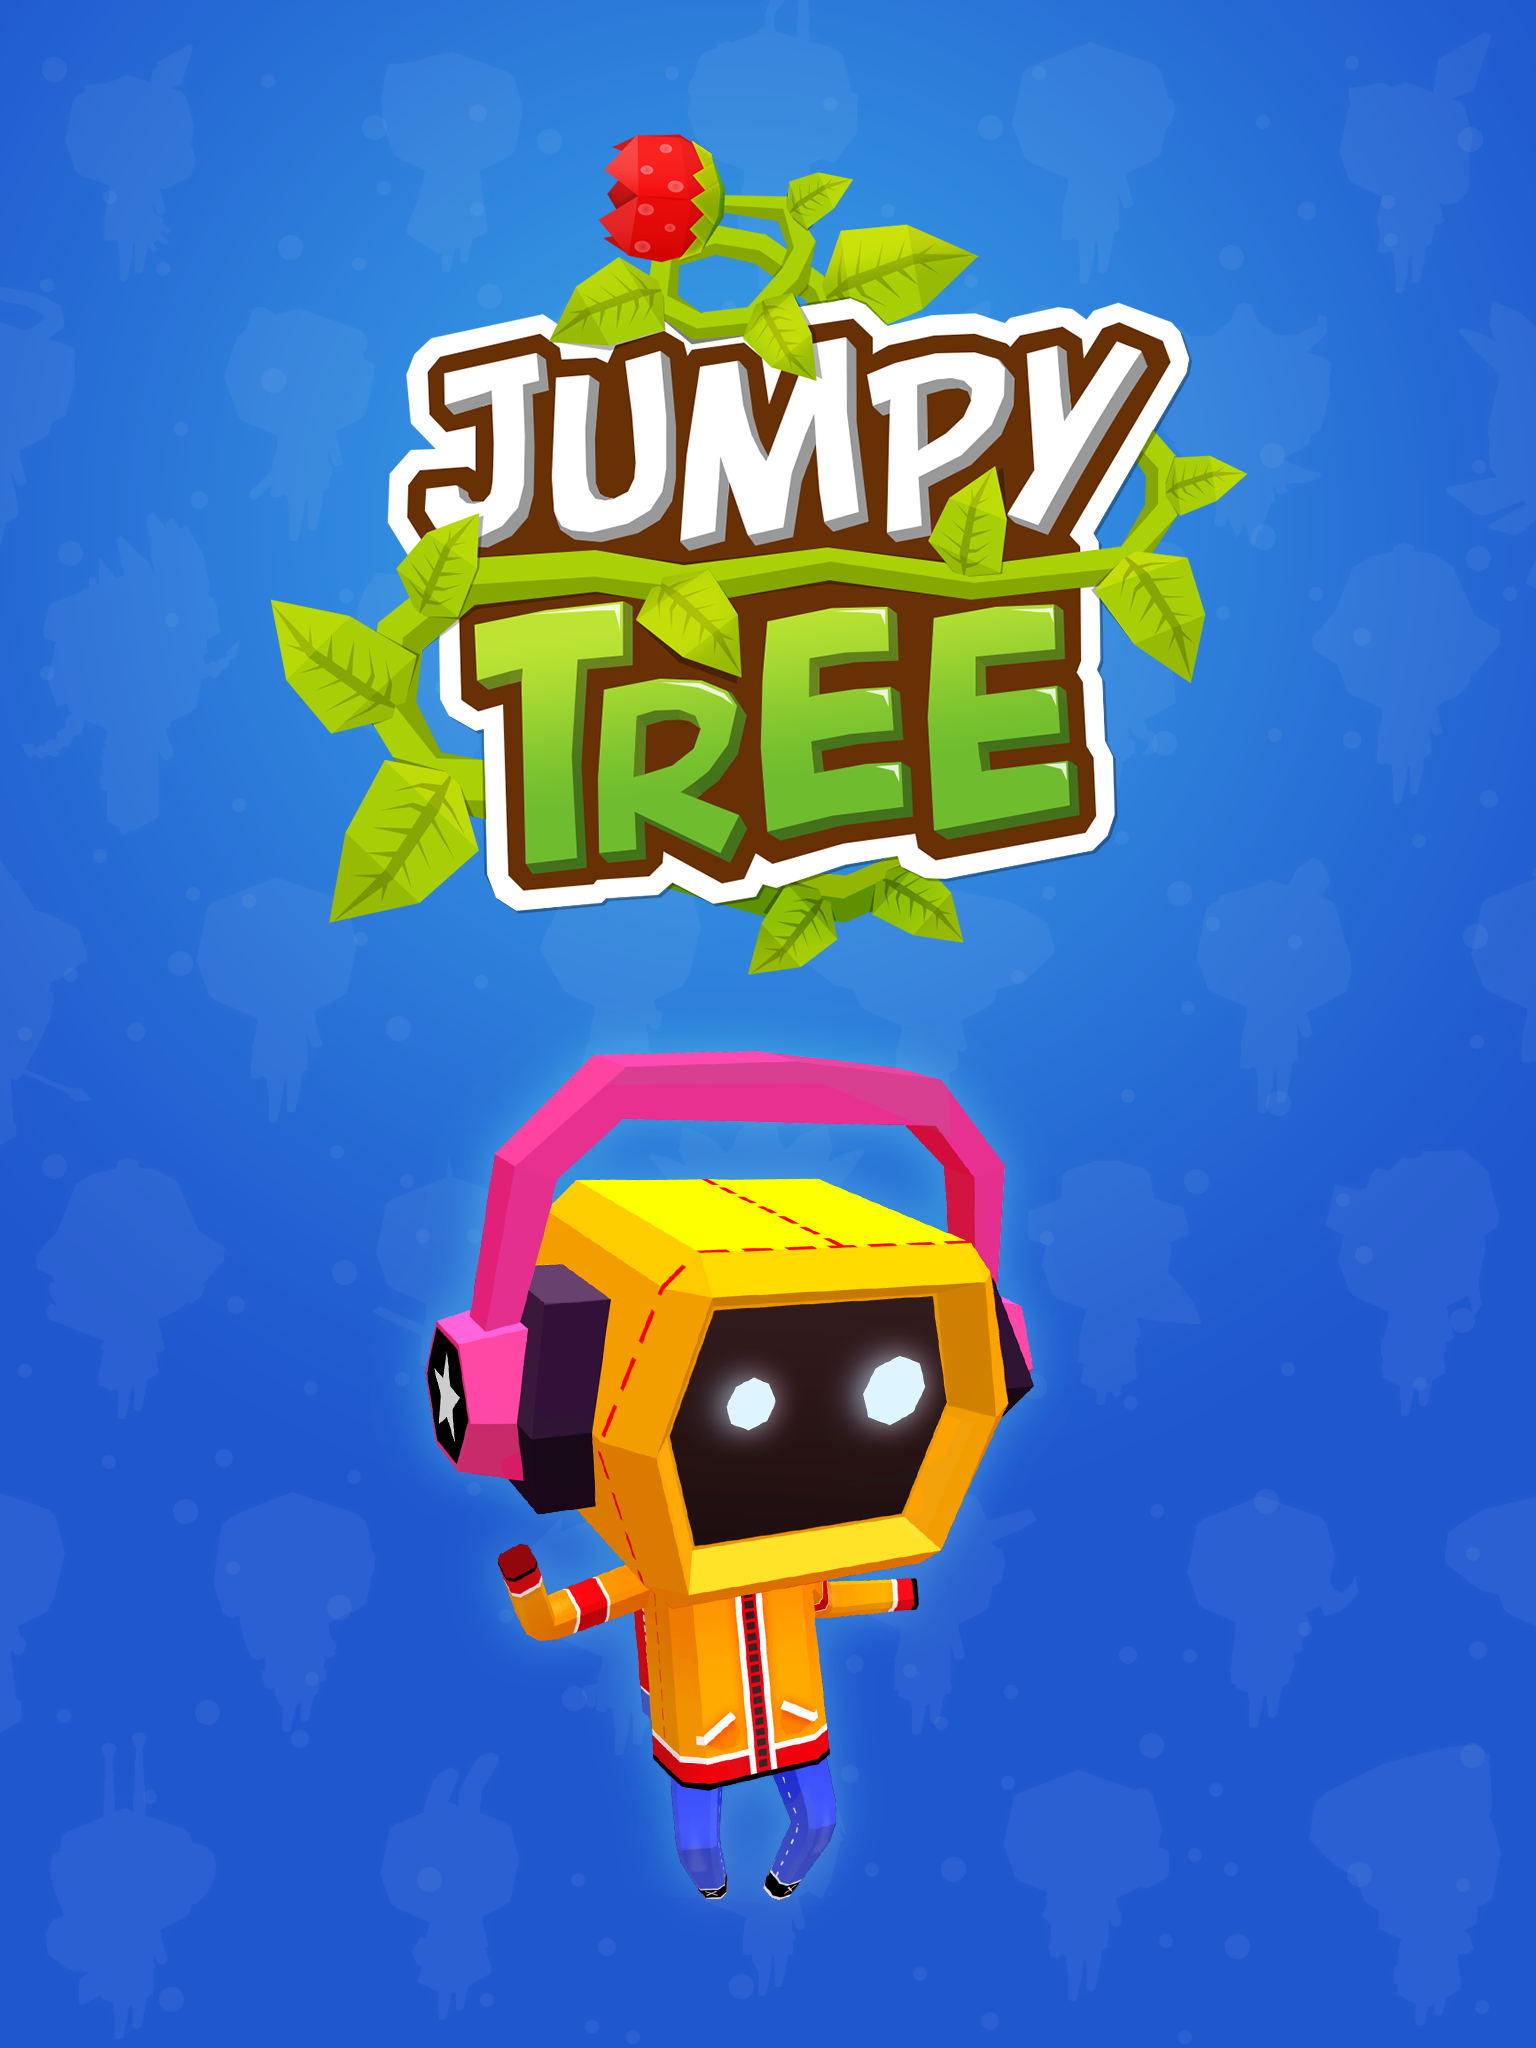 Jumpy Tree - Arcade Hopperのキャプチャ